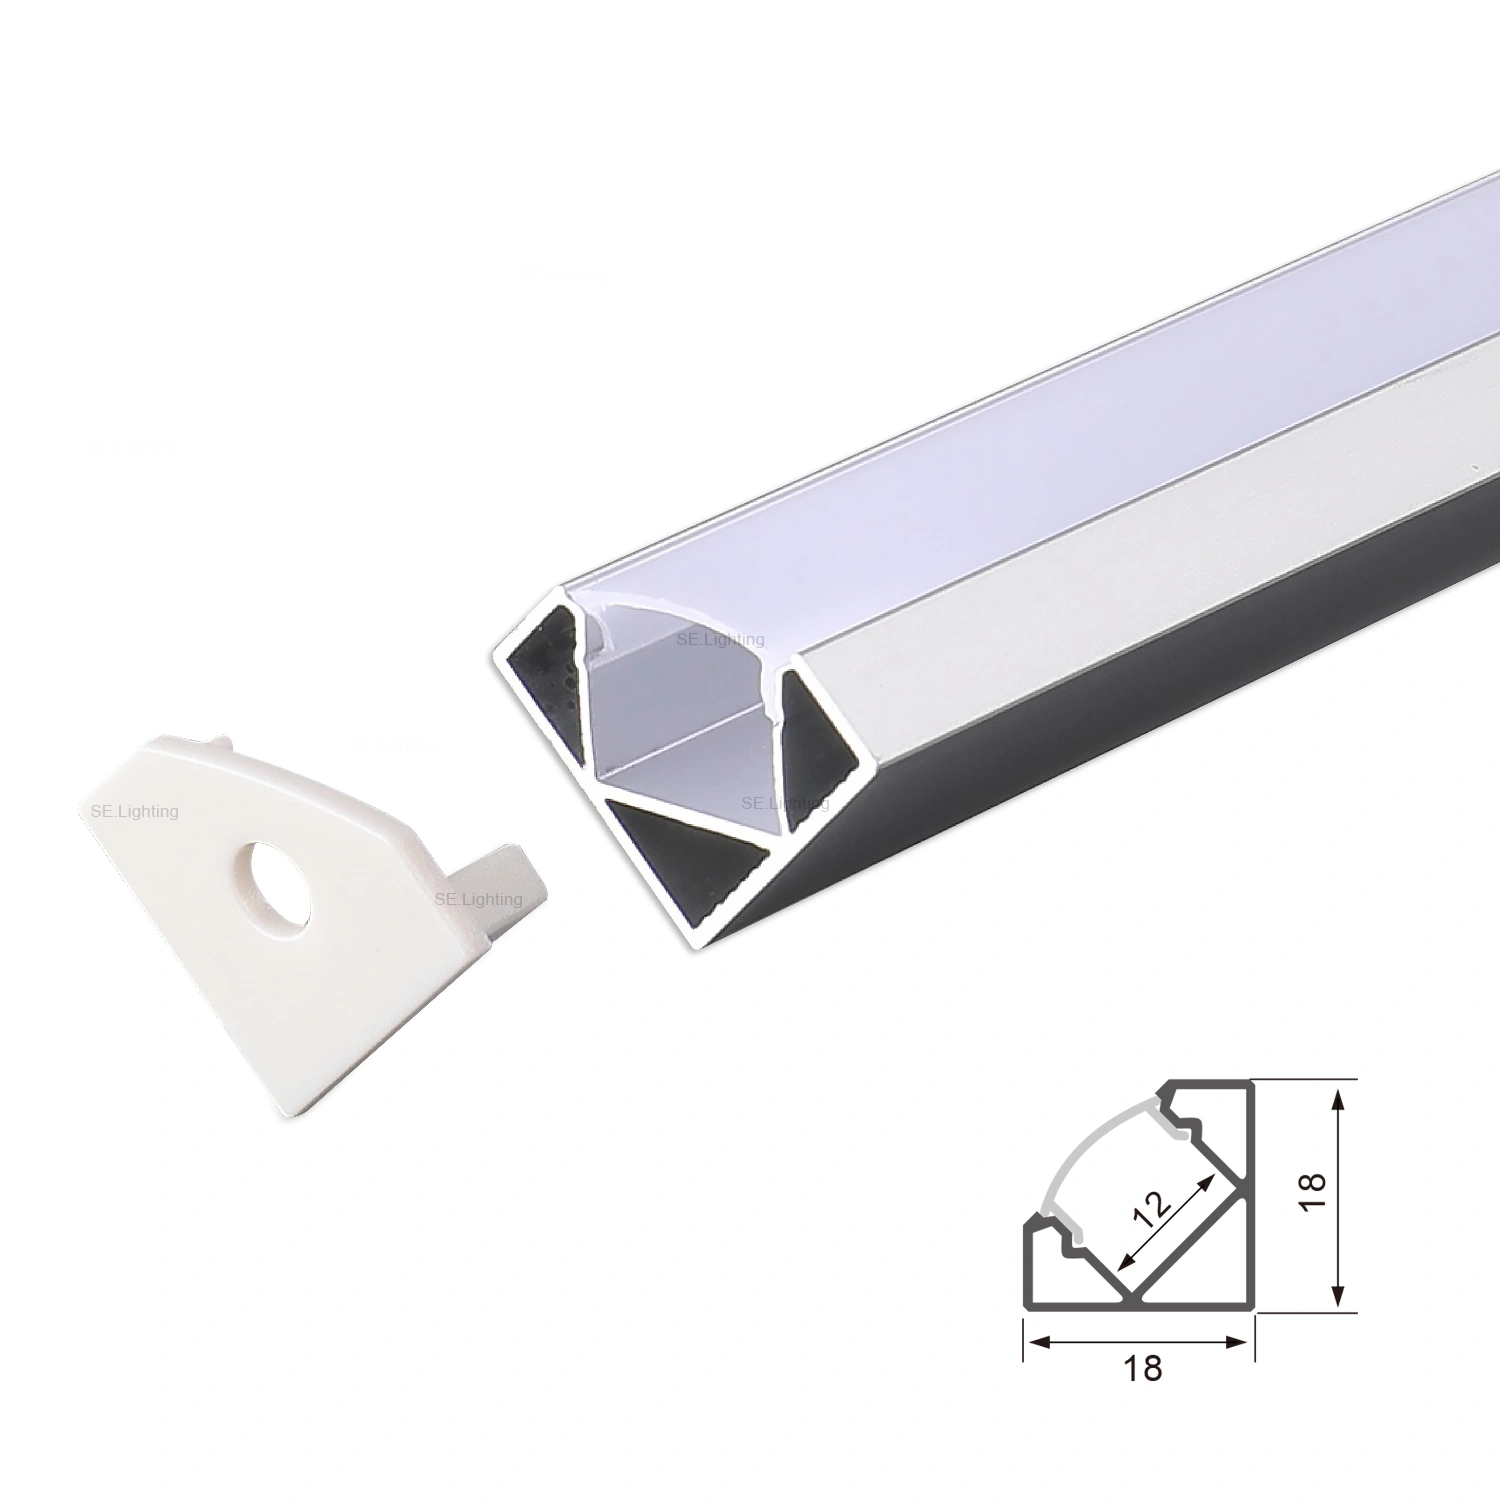 18x18mm LED Aluminum Profiles